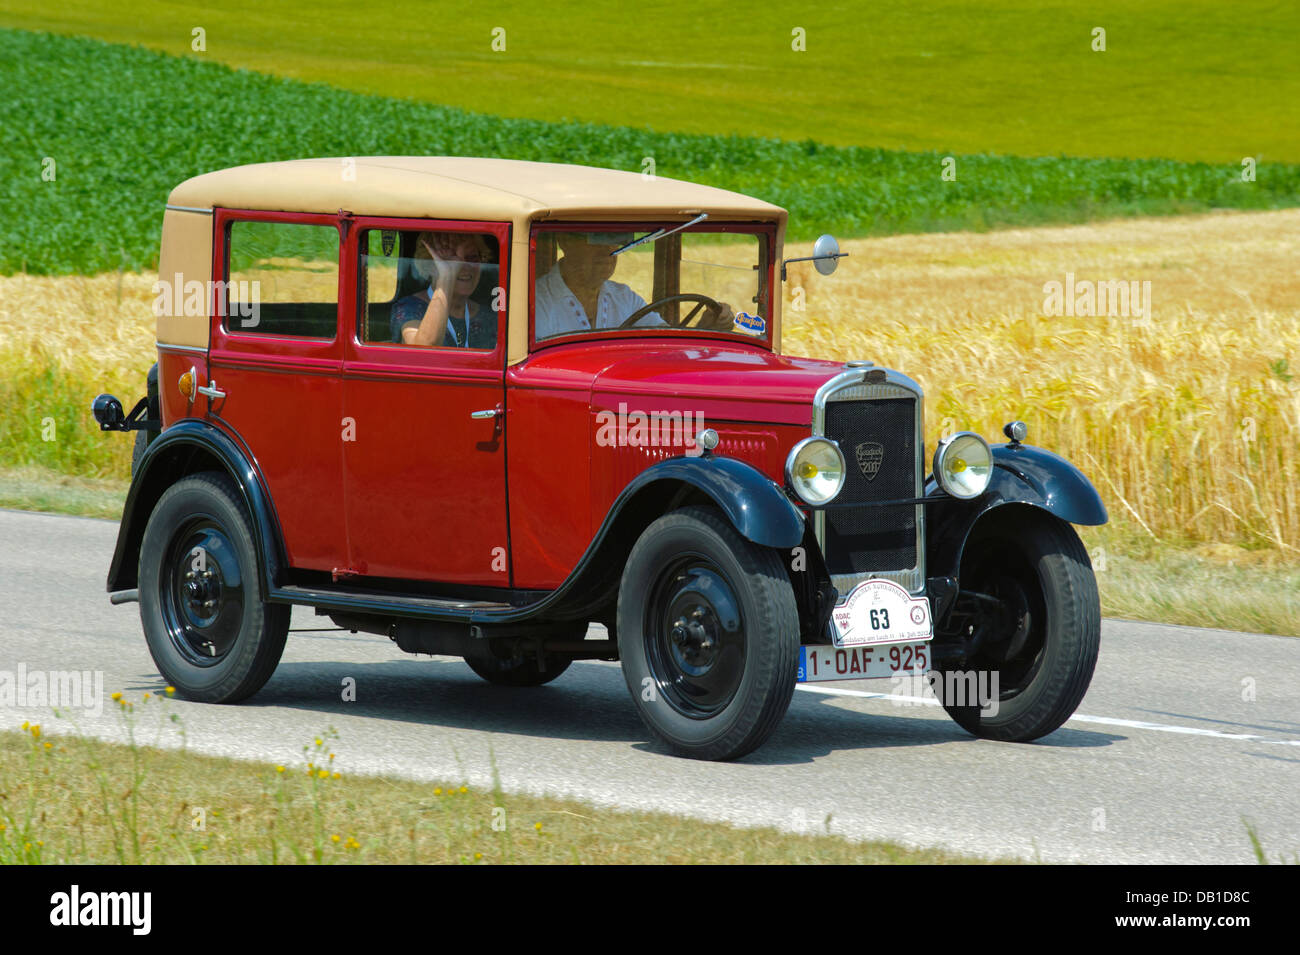 Peugeot 201 Berlin, built at year 1929, photo taken on July 13, 2013 in Landsberg, Germany Stock Photo